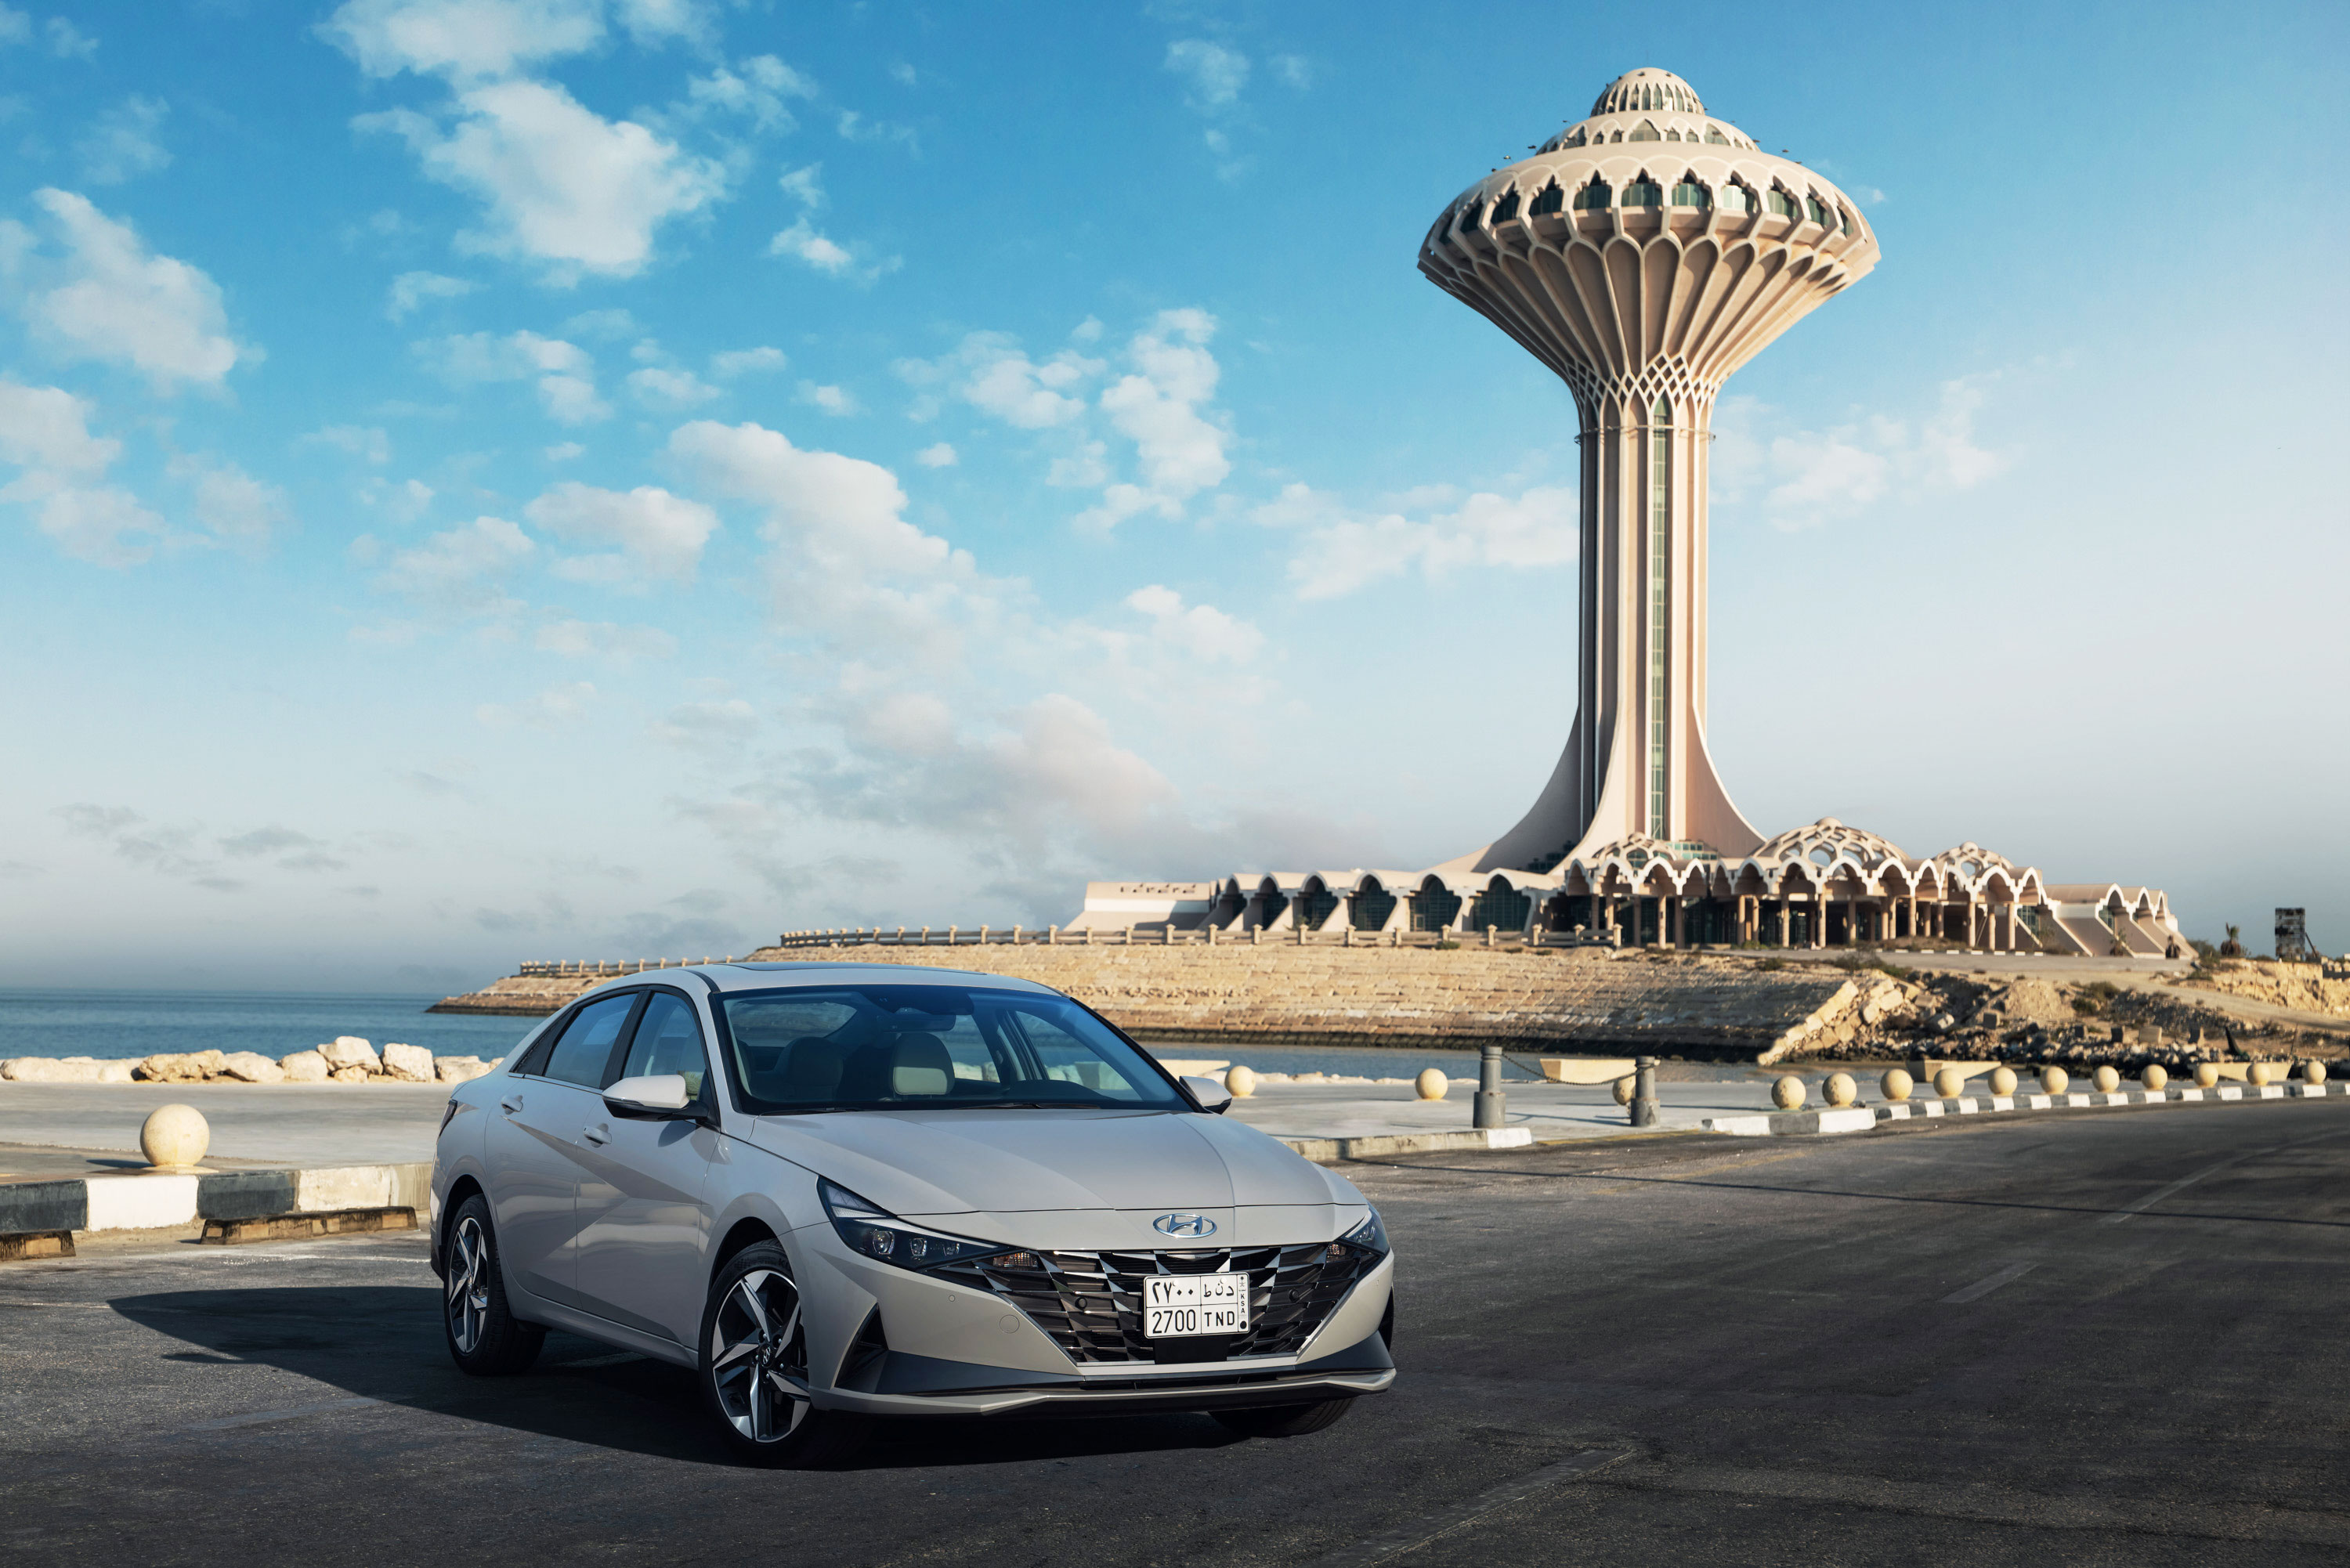 Hyundai ELANTRA reigns supreme in the Kingdom’s car market